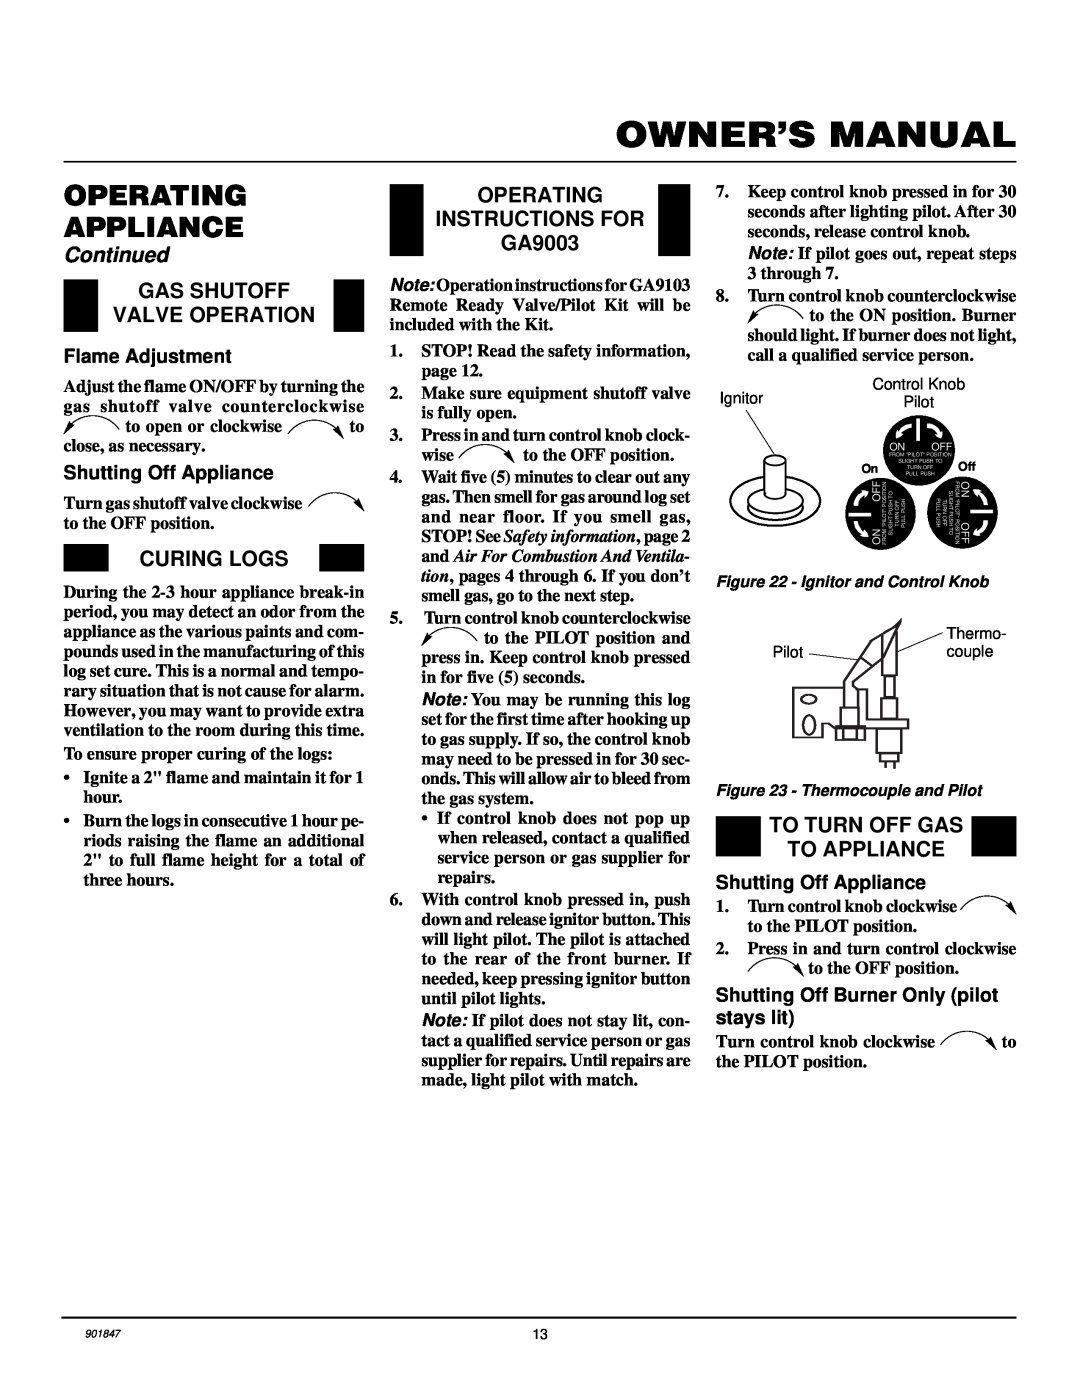 Desa VVTR18, VVTR24 Owner’S Manual, Operating Appliance, Continued, Gas Shutoff Valve Operation, Curing Logs 